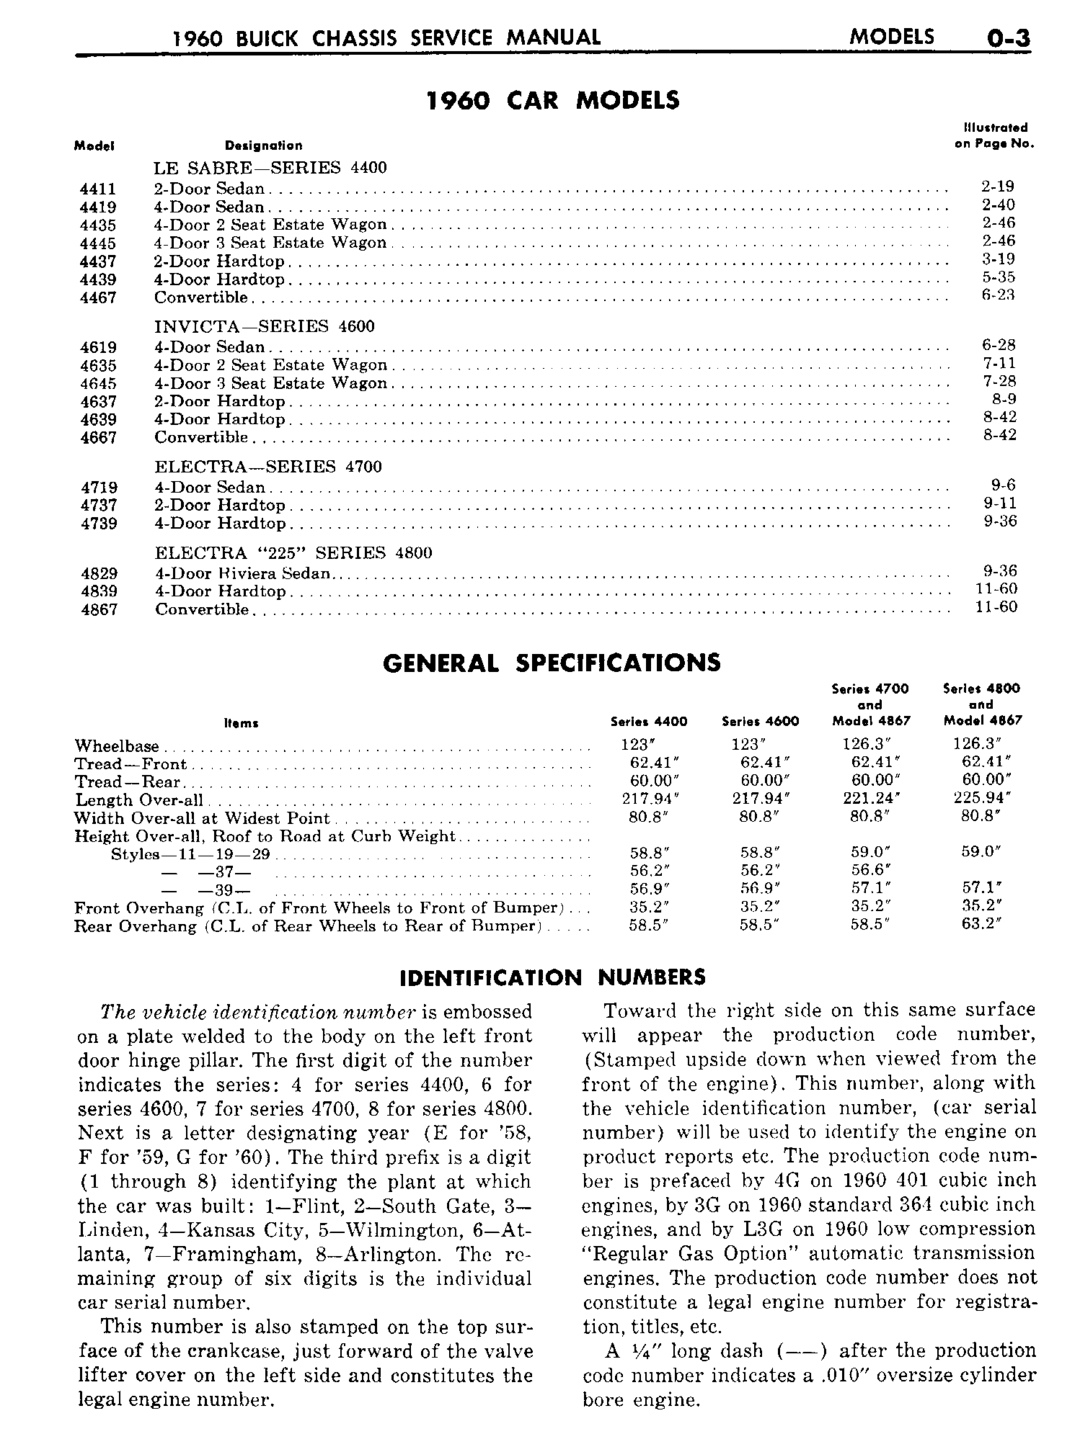 n_01 1960 Buick Shop Manual - Gen Information-005-005.jpg